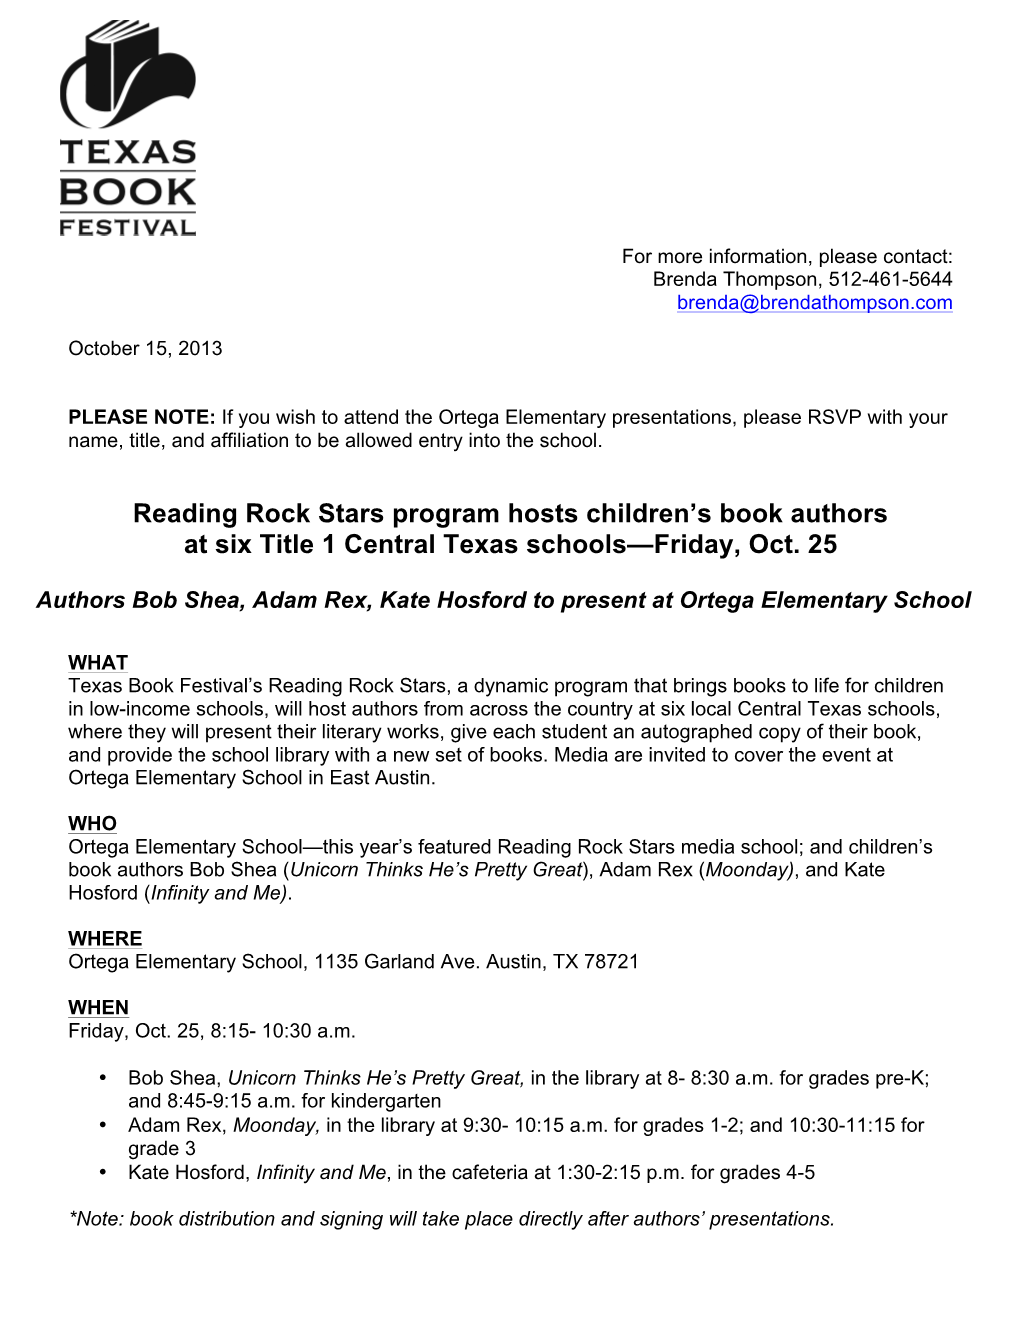 Reading Rock Stars Program Hosts Children's Book Authors at Six Title 1